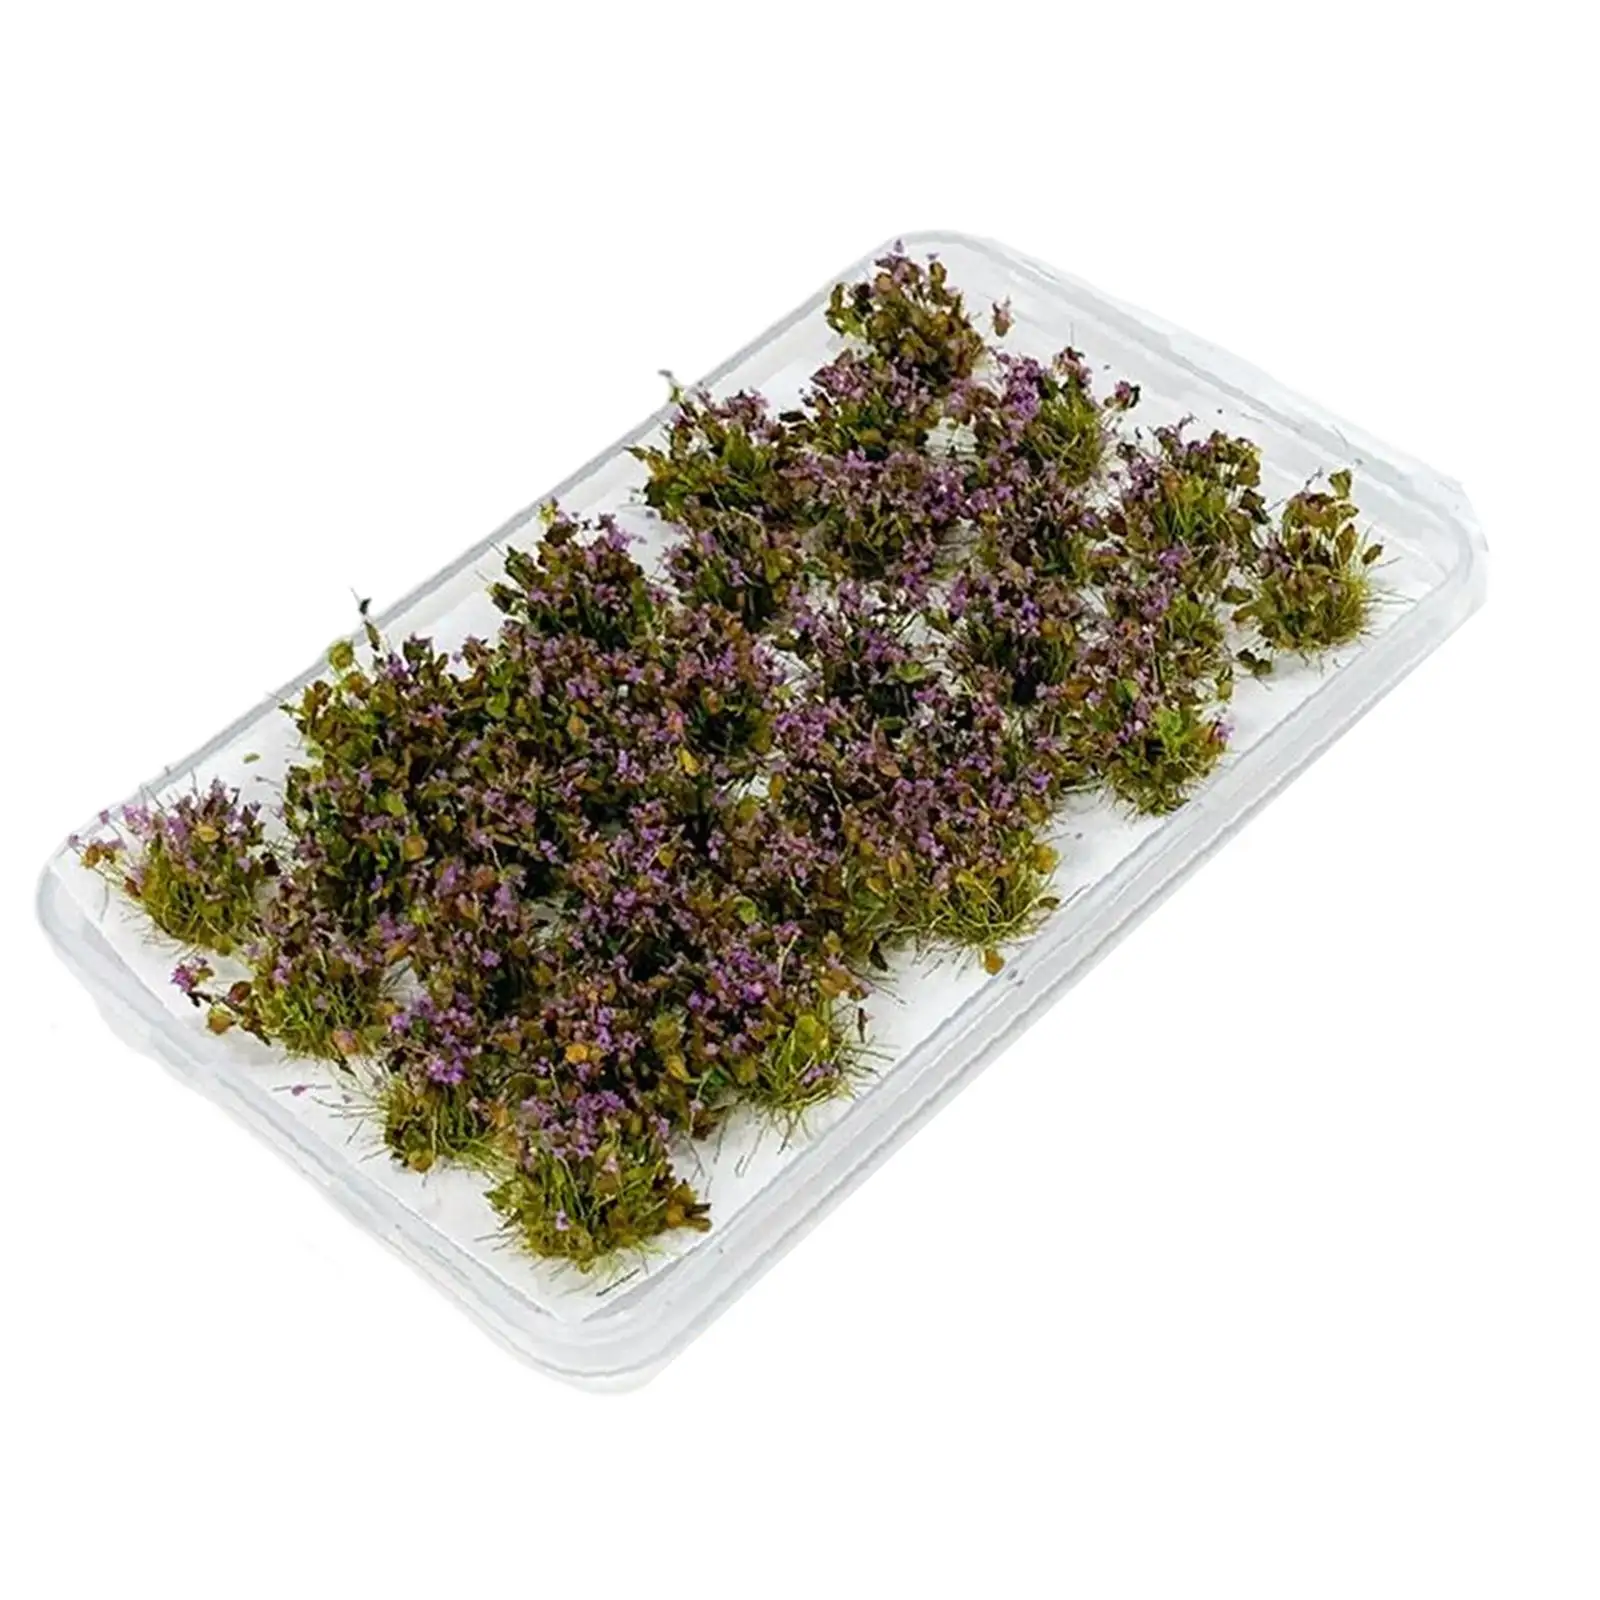 32 Pieces Micro Landscape Miniature Flower Static Model for Architecture Building Model Railroad Scenery Sand Table Decor